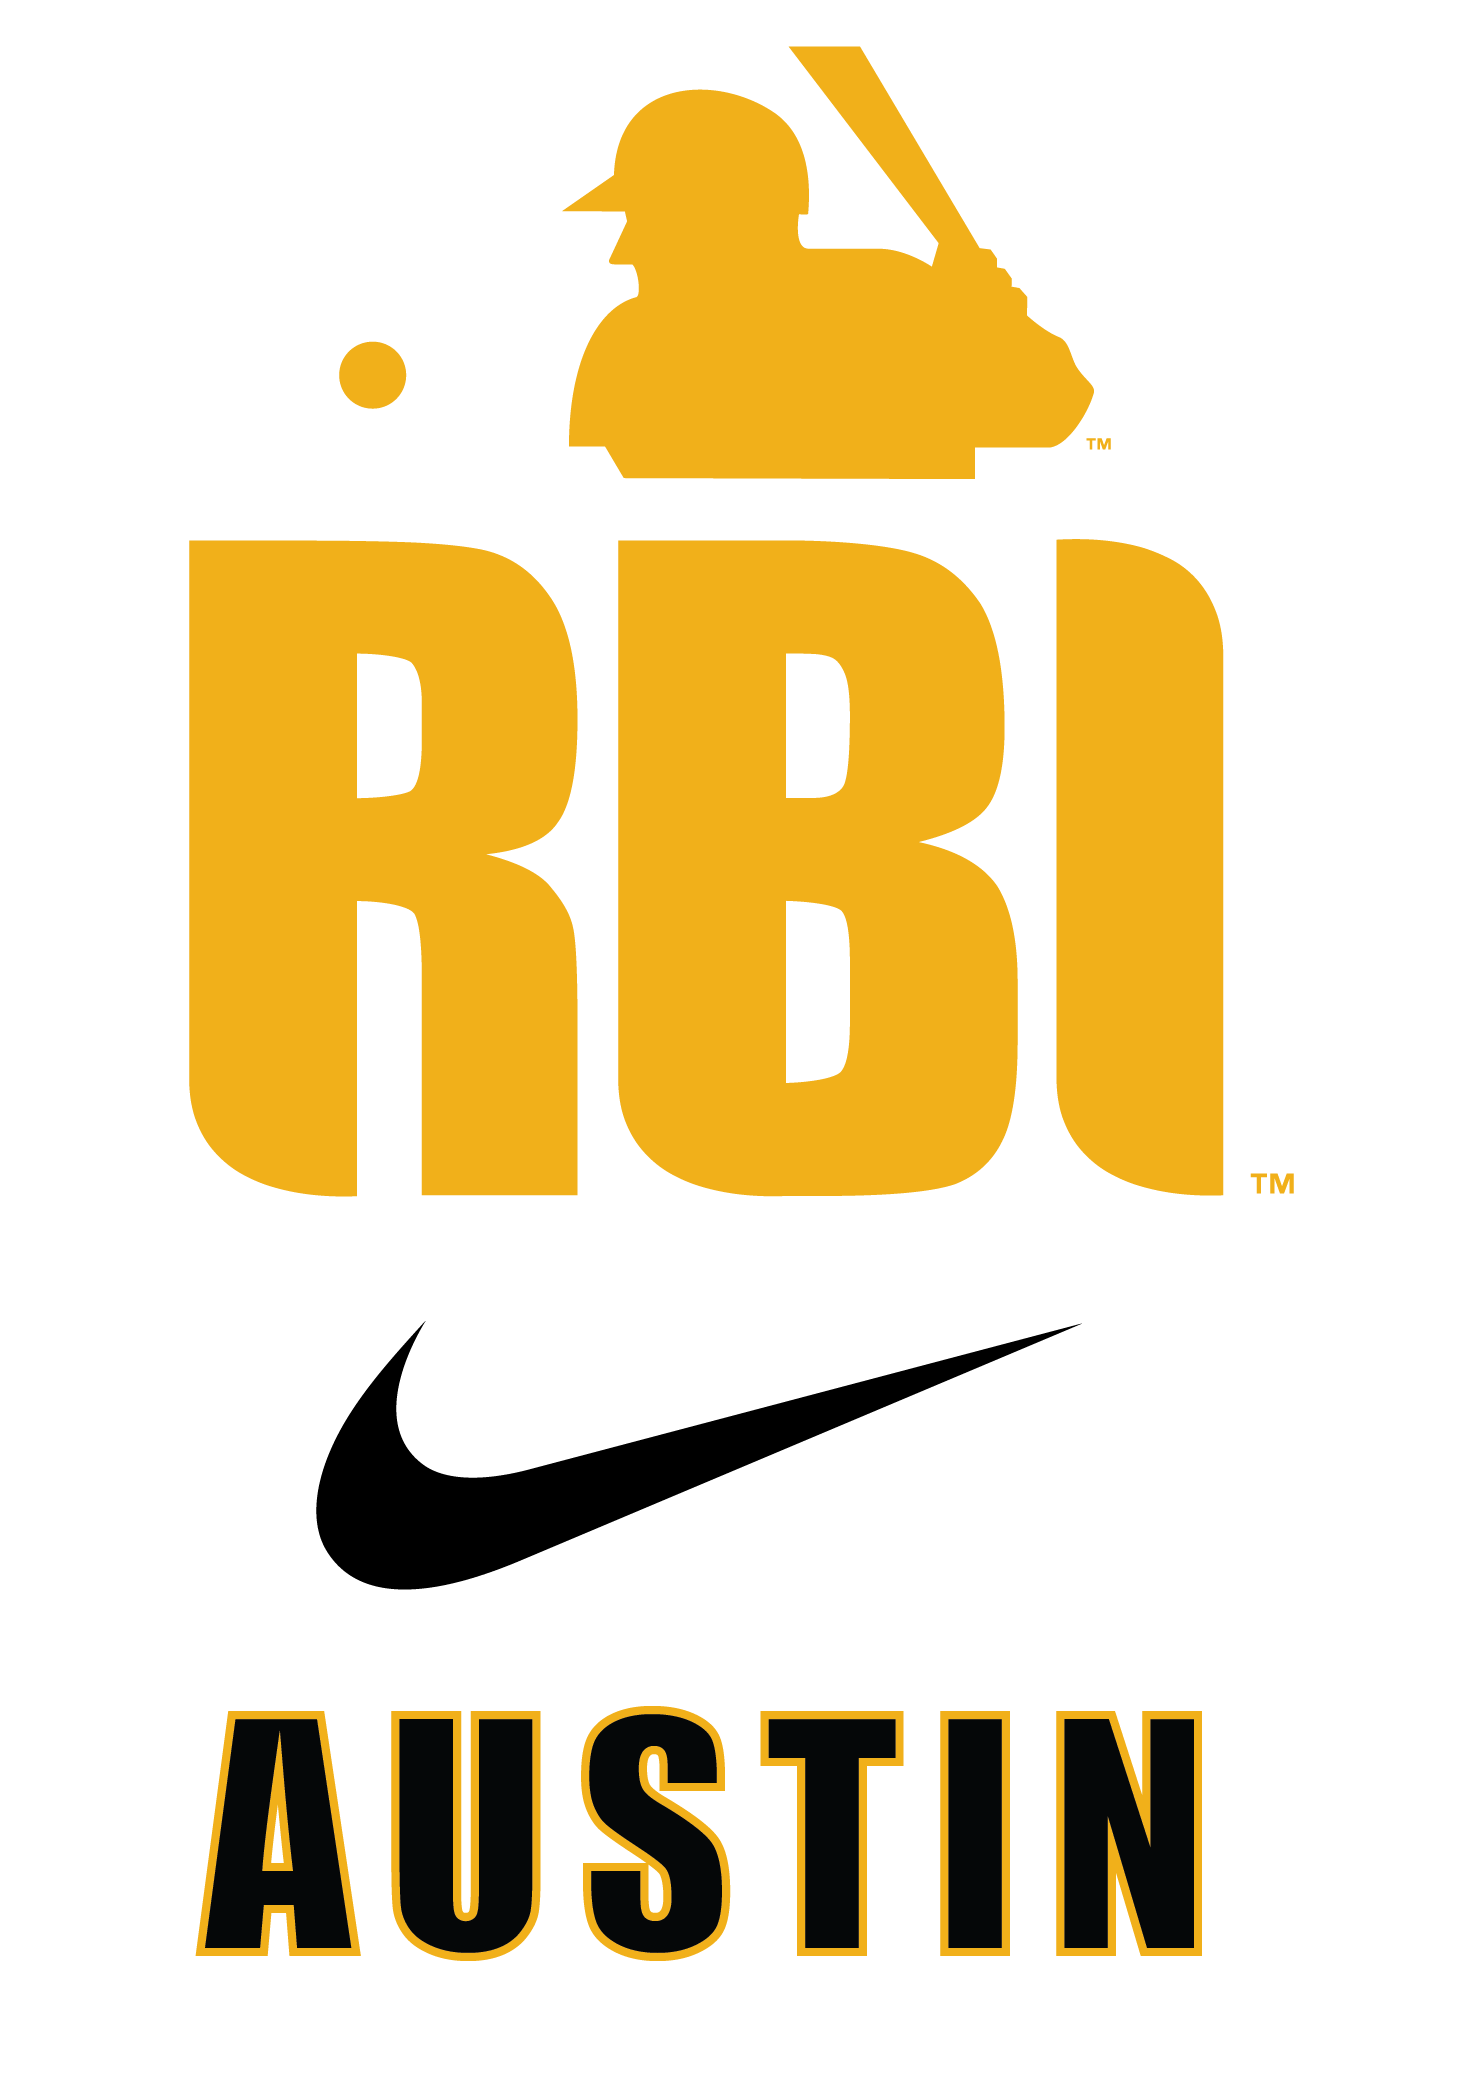 RBI Austin